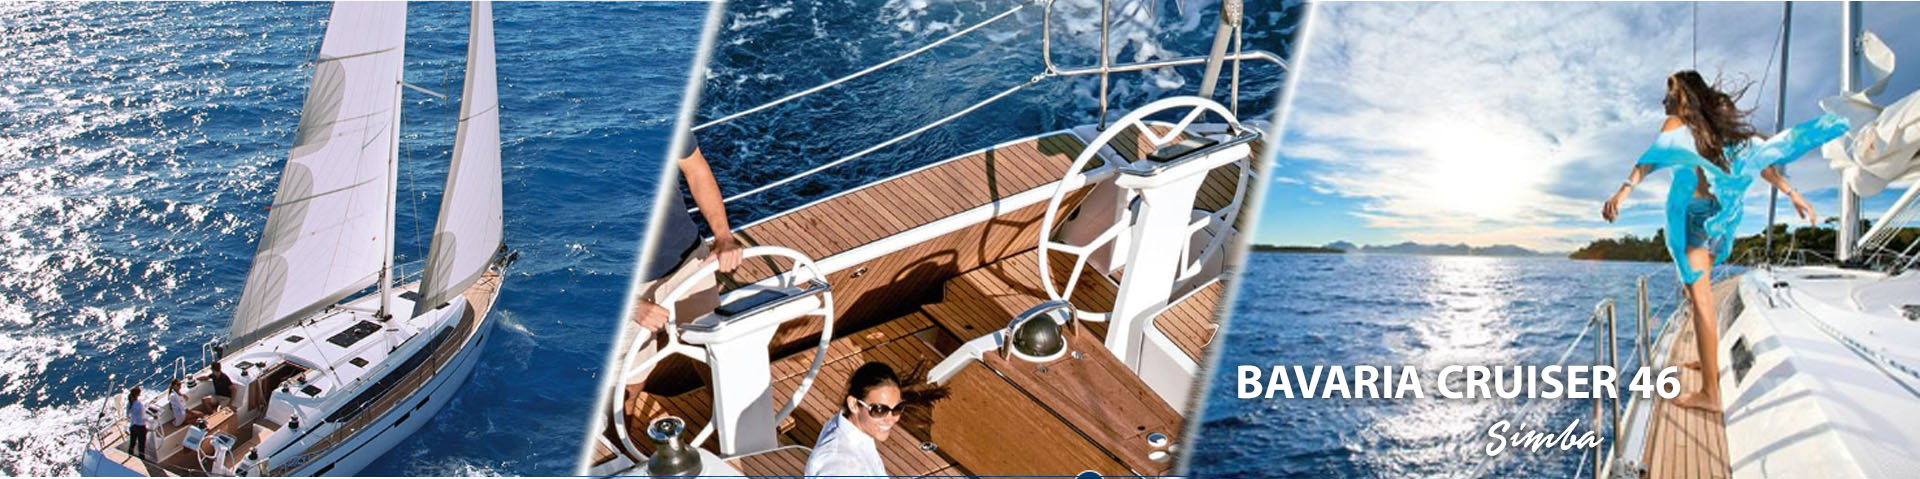 Bavaria cruiser 46 Simba sailing yacht rental